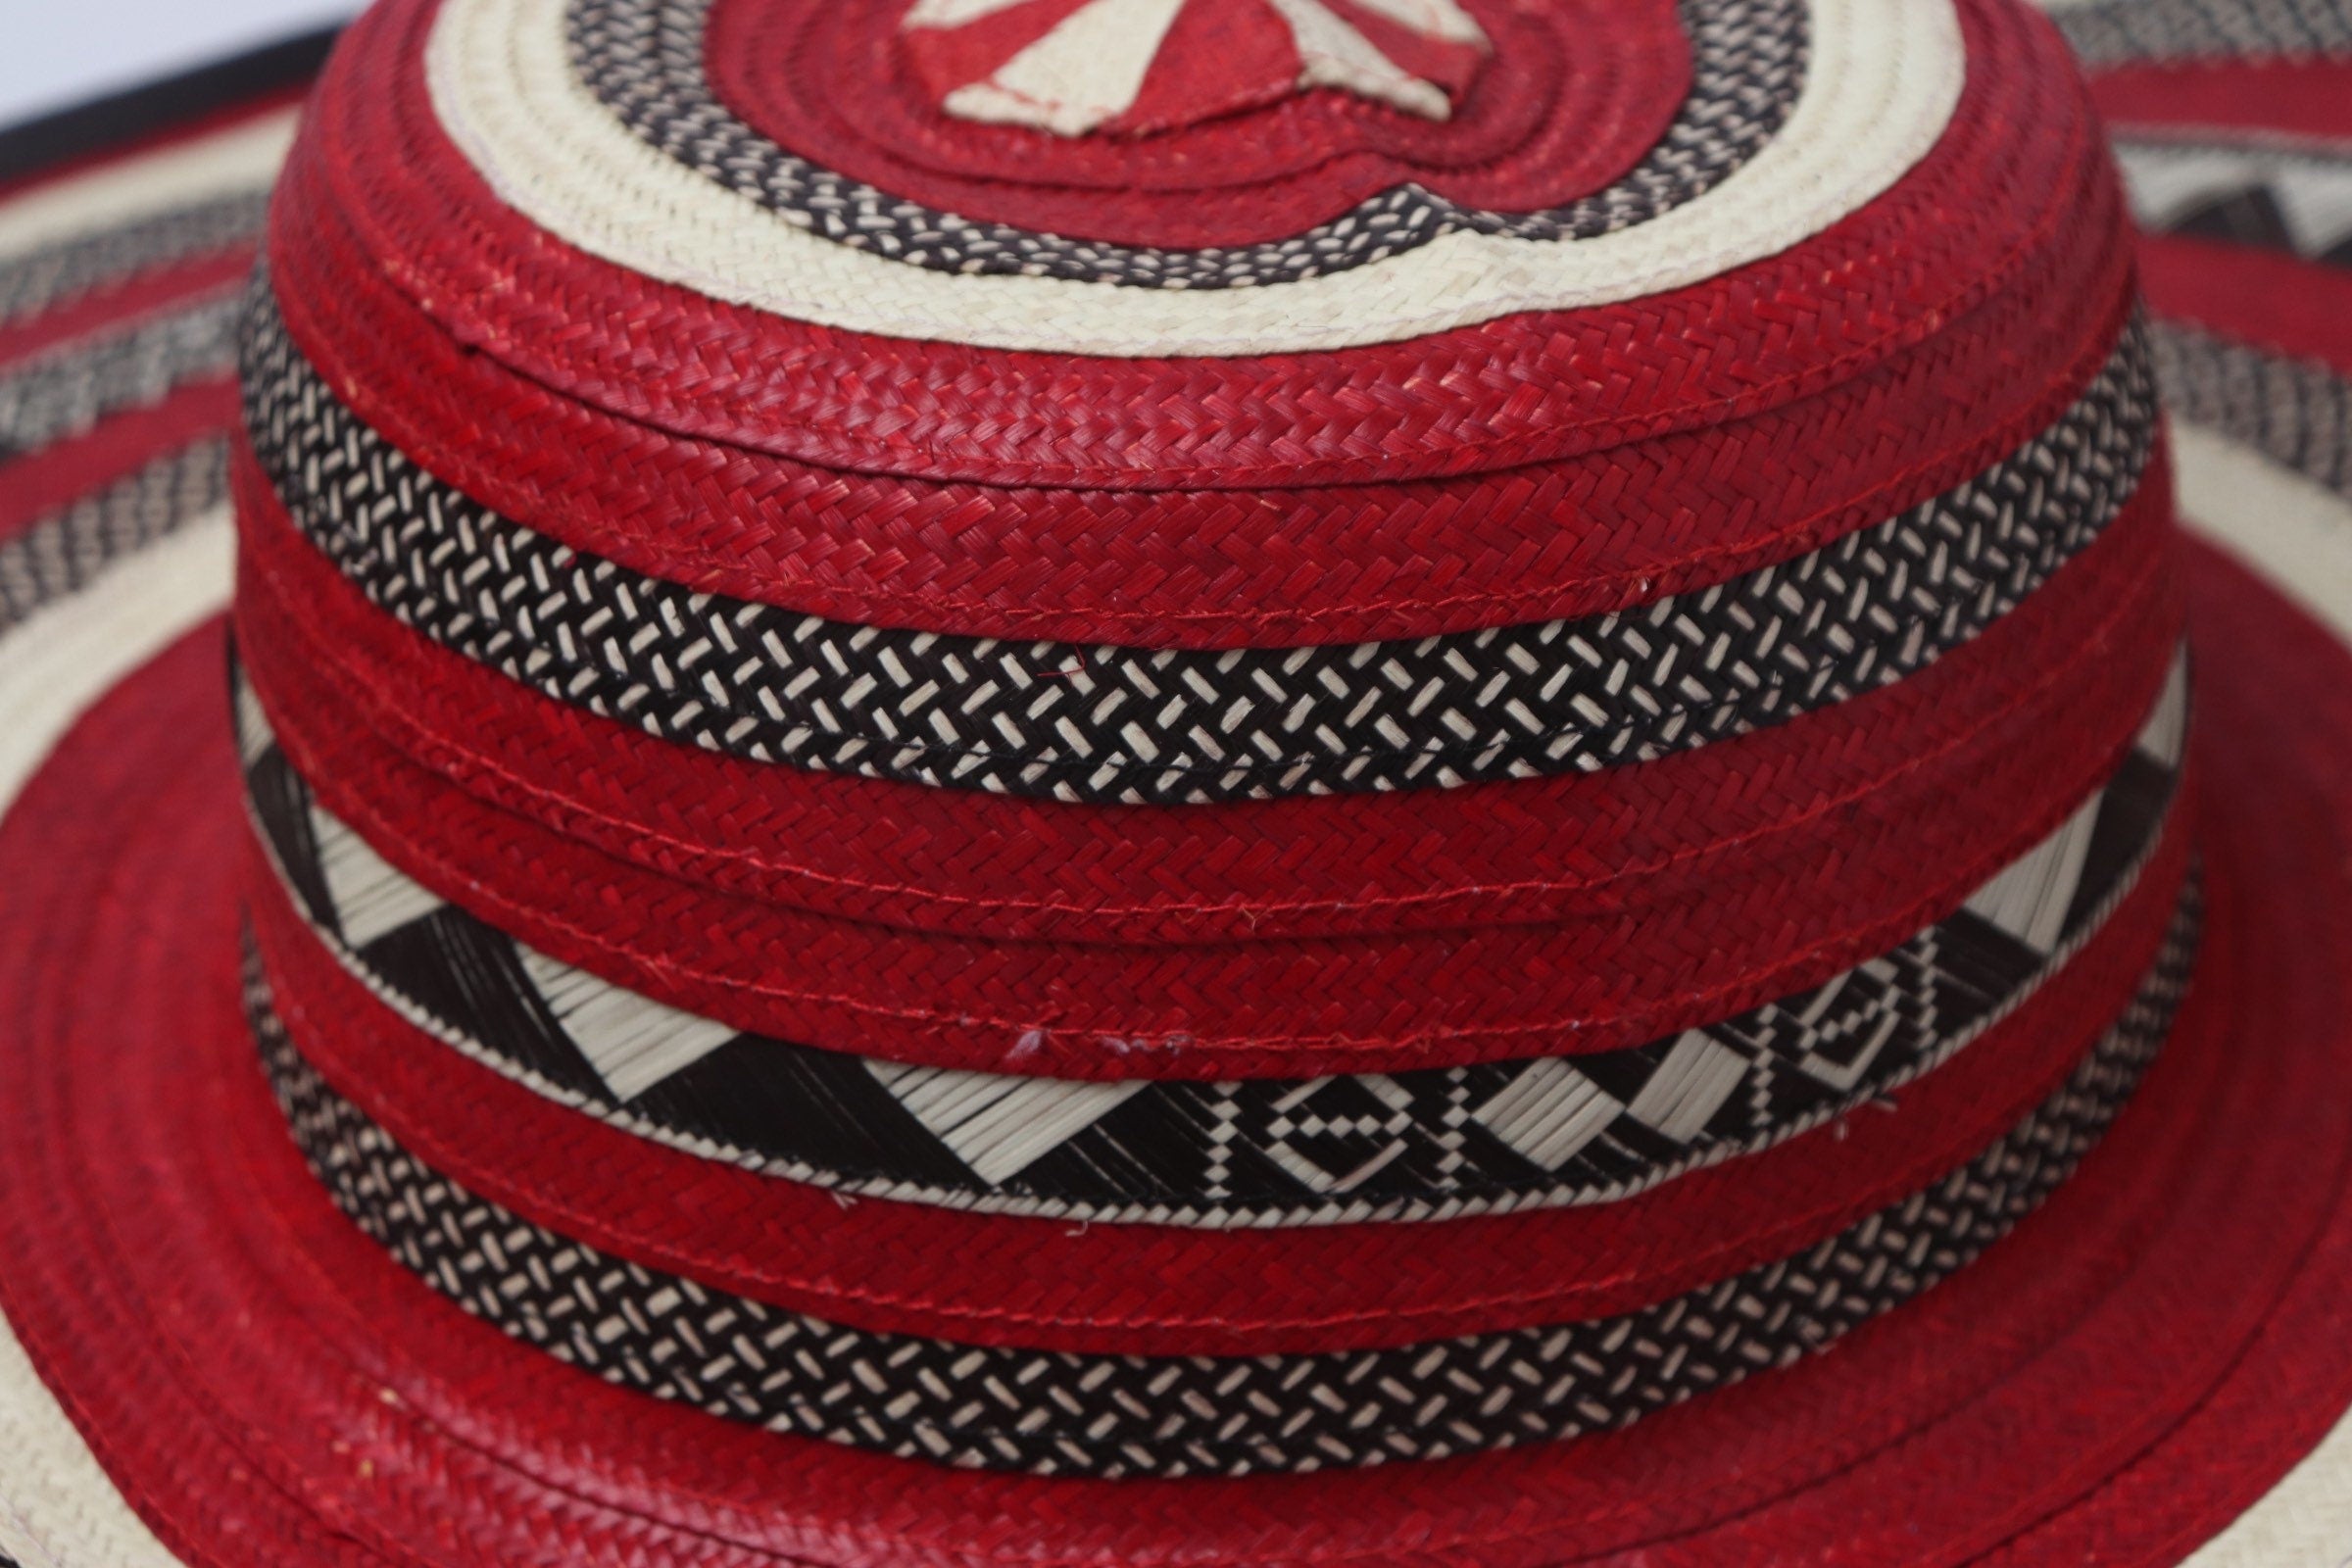 Red Sombrero Vueltiao Hat – Best of Colombia